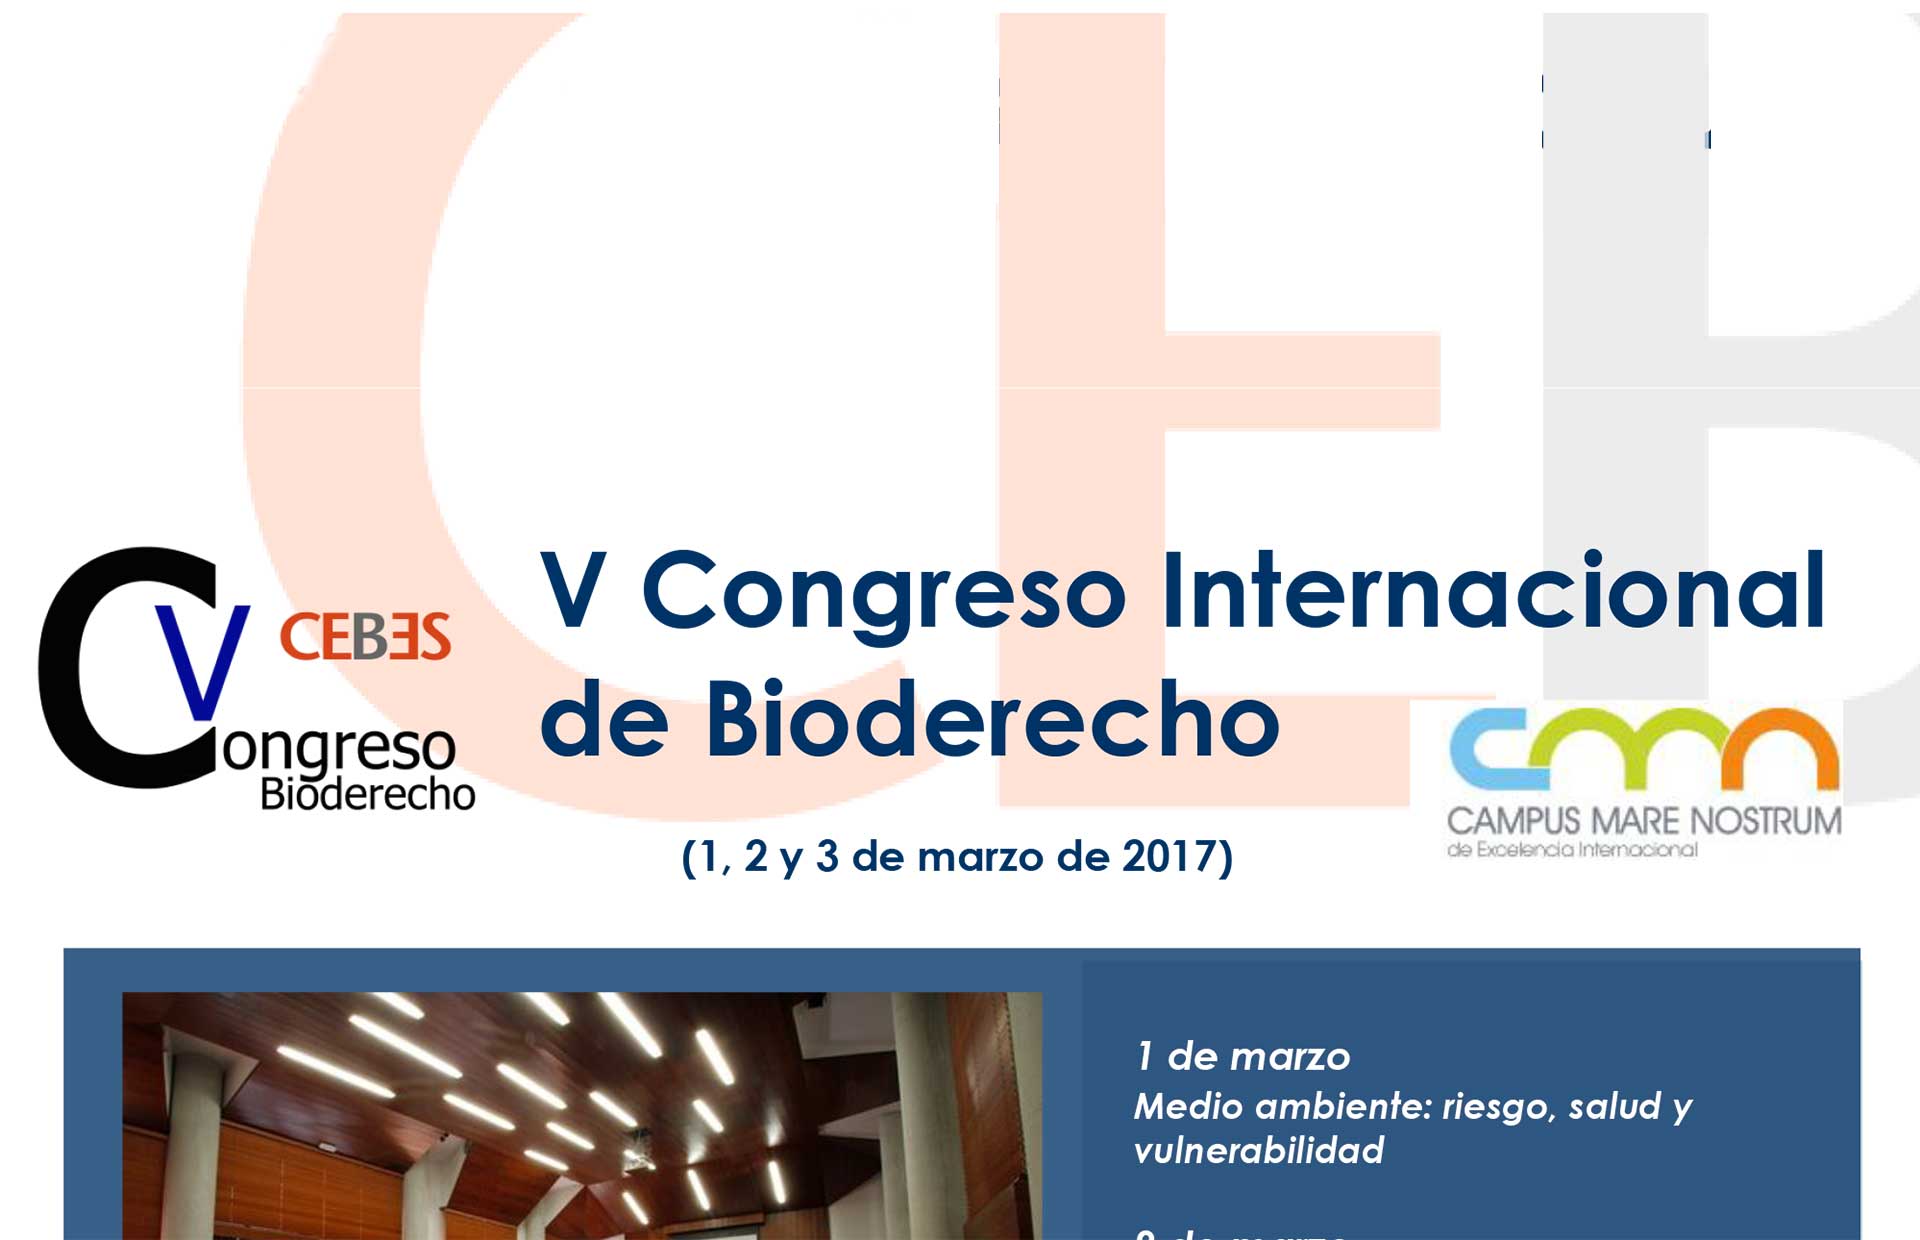 V Congreso Internacional de Bioderecho